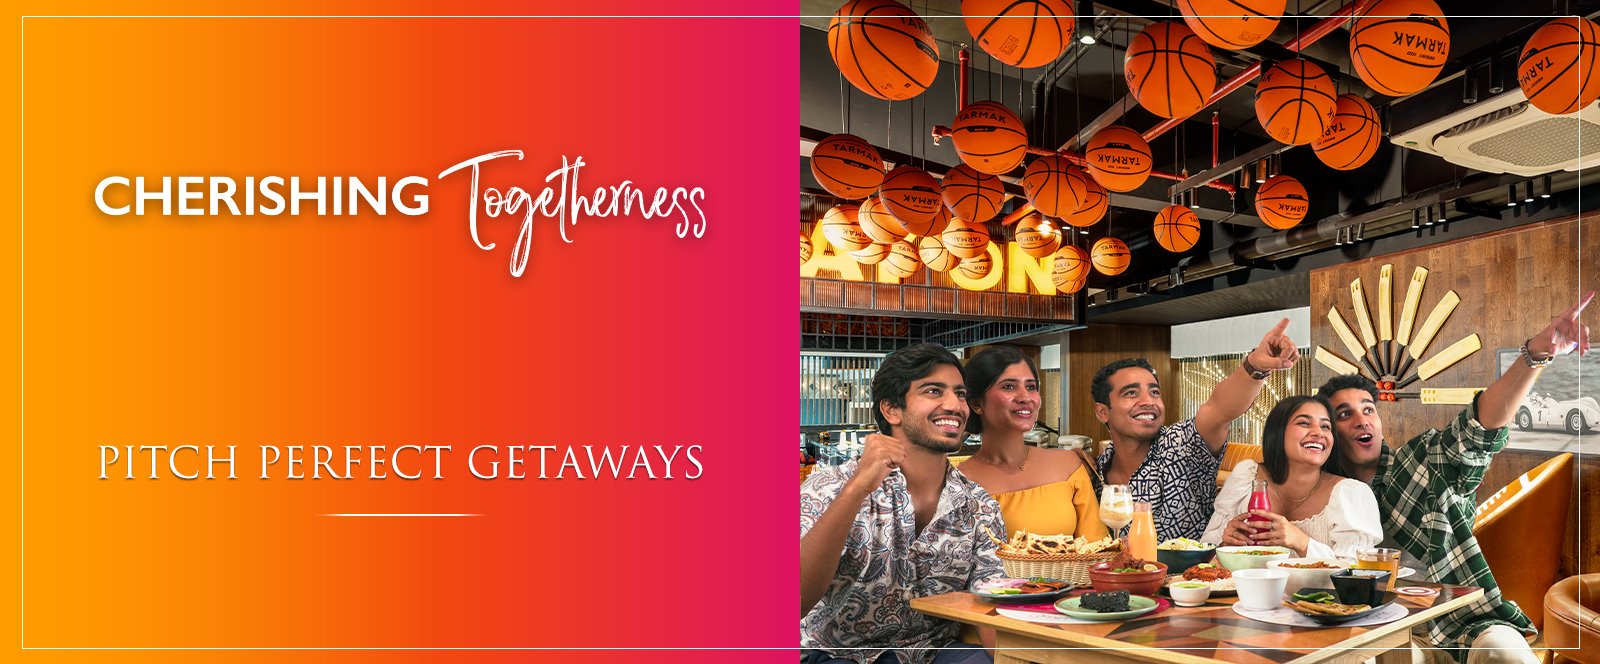 cherishing_togetherness_picth_perfect_getaways